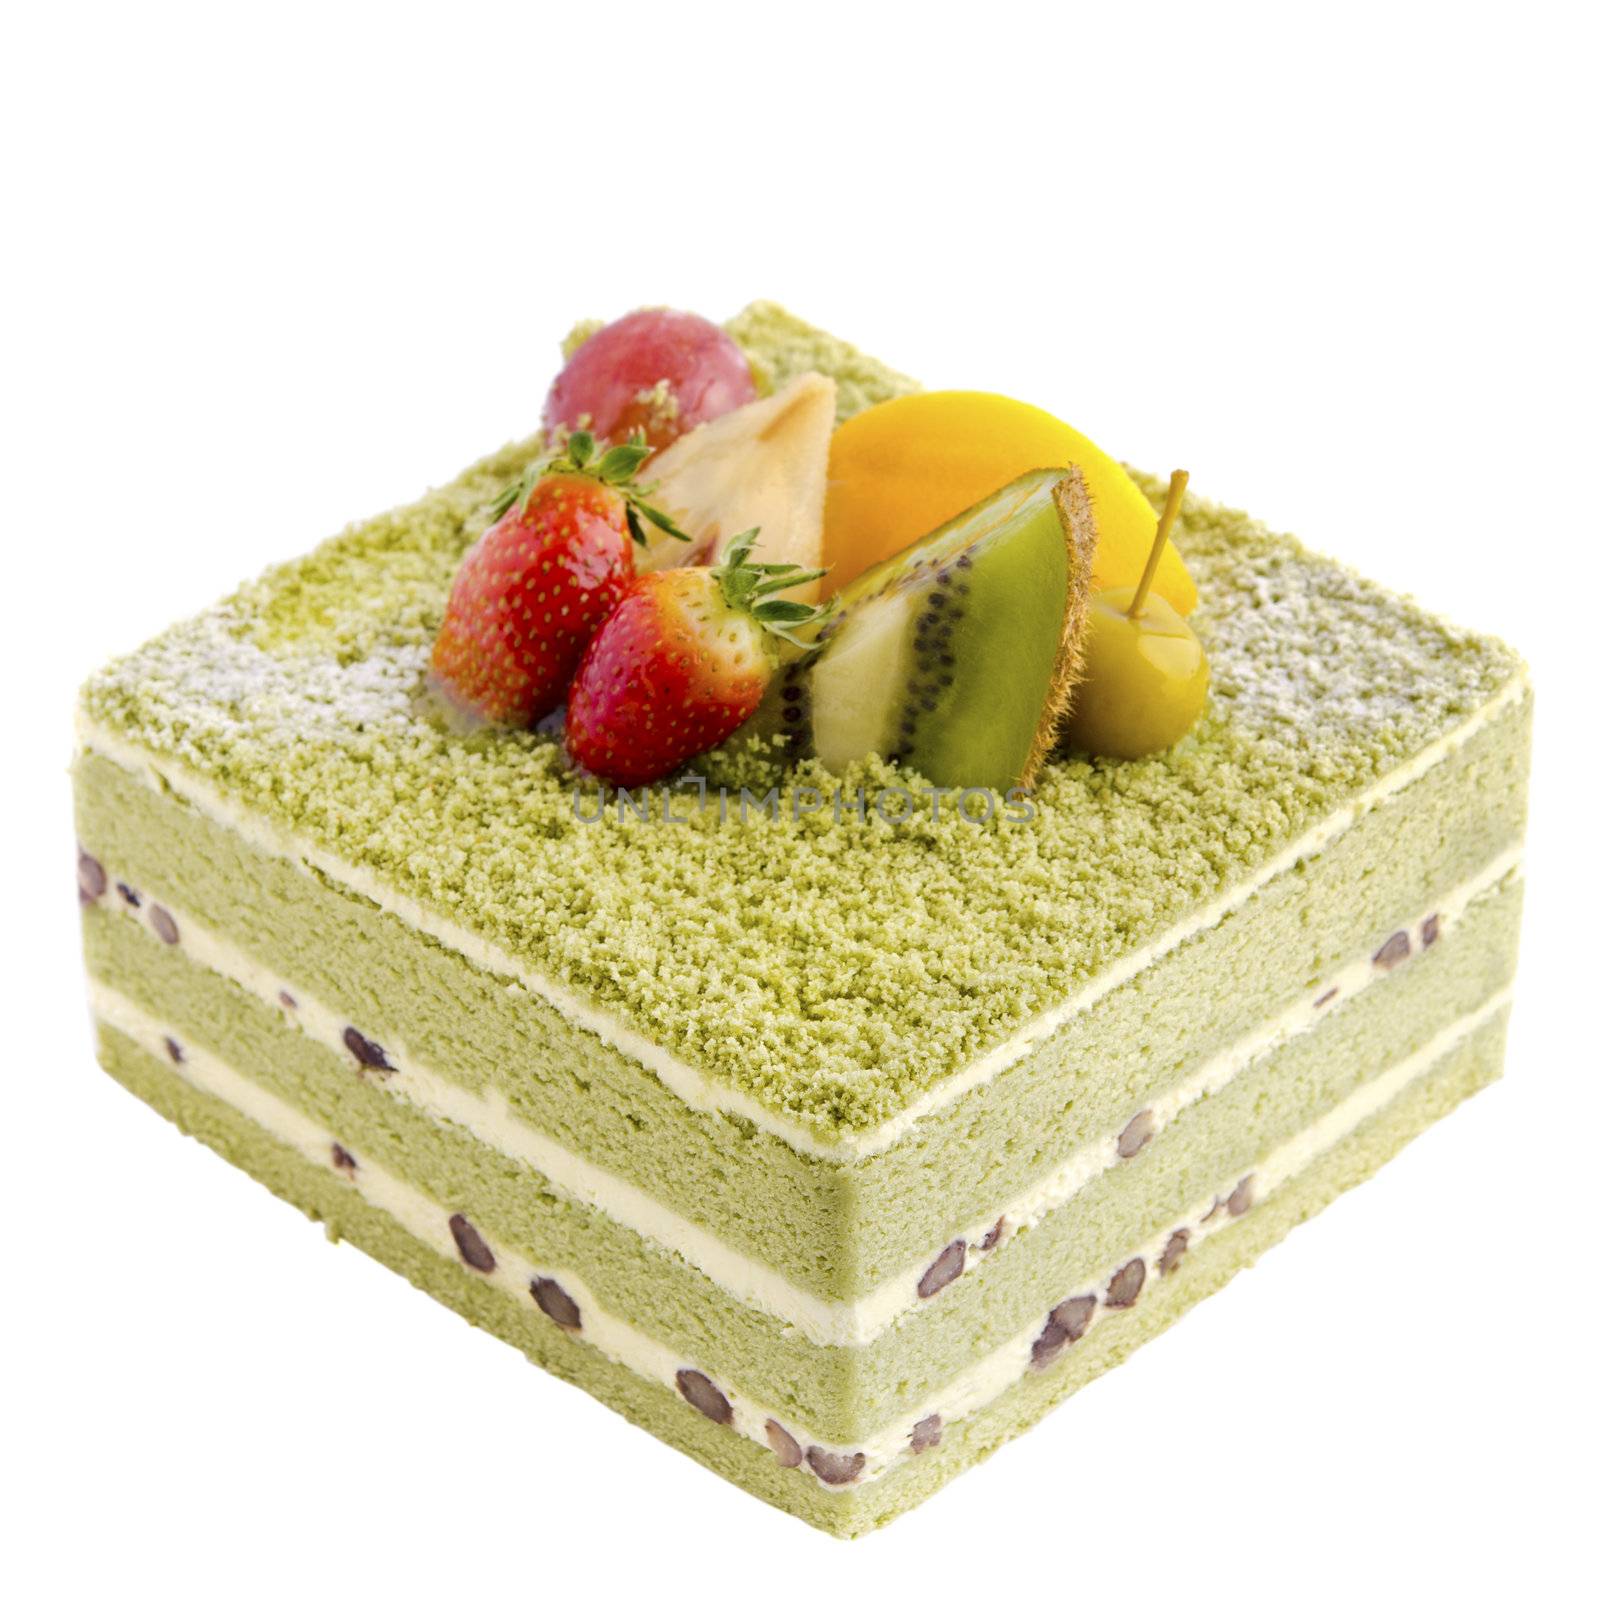 Japanese Macha Cake by szefei